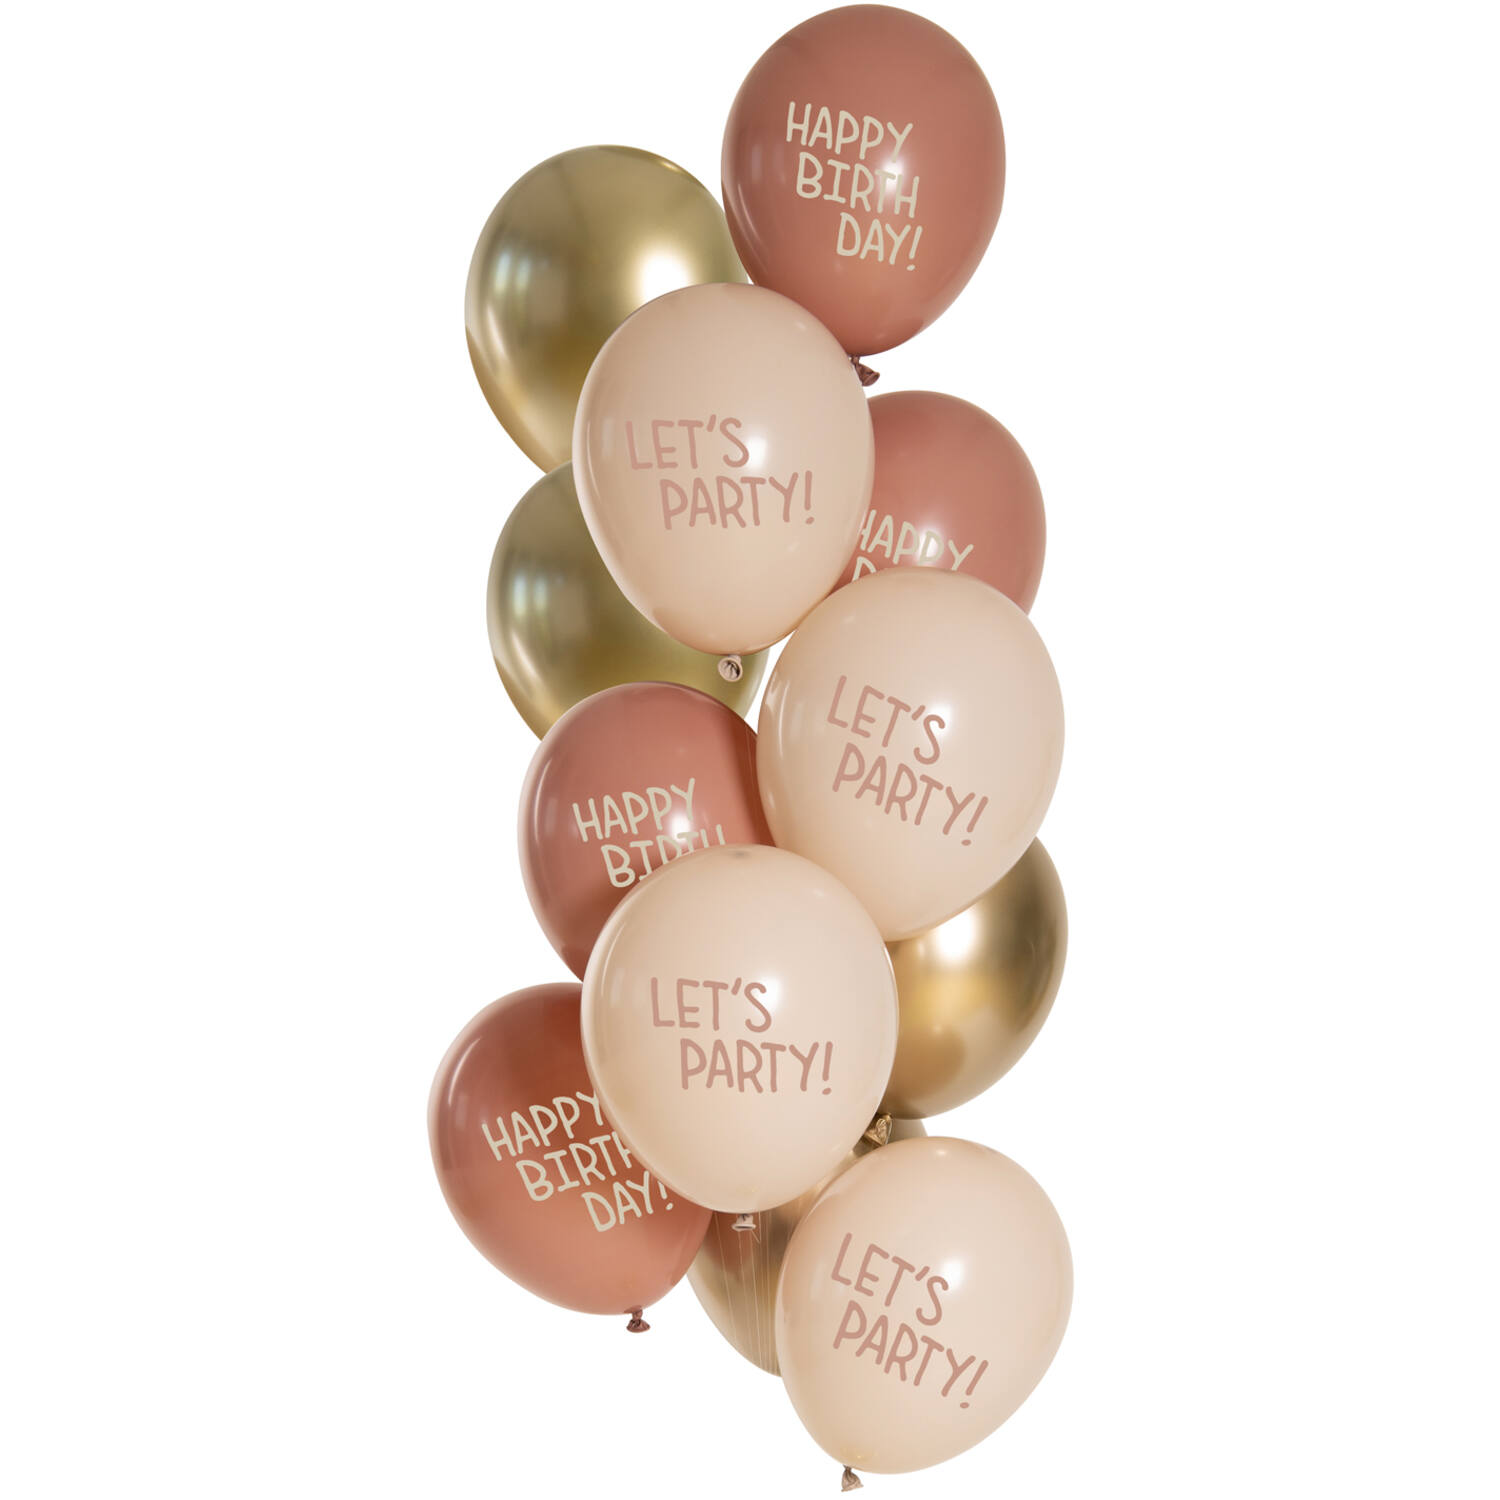 NEU Premium-Latex-Luftballons Happy Birthday, Let's Party, Golden Blossom, 33cm, 12 Stk.